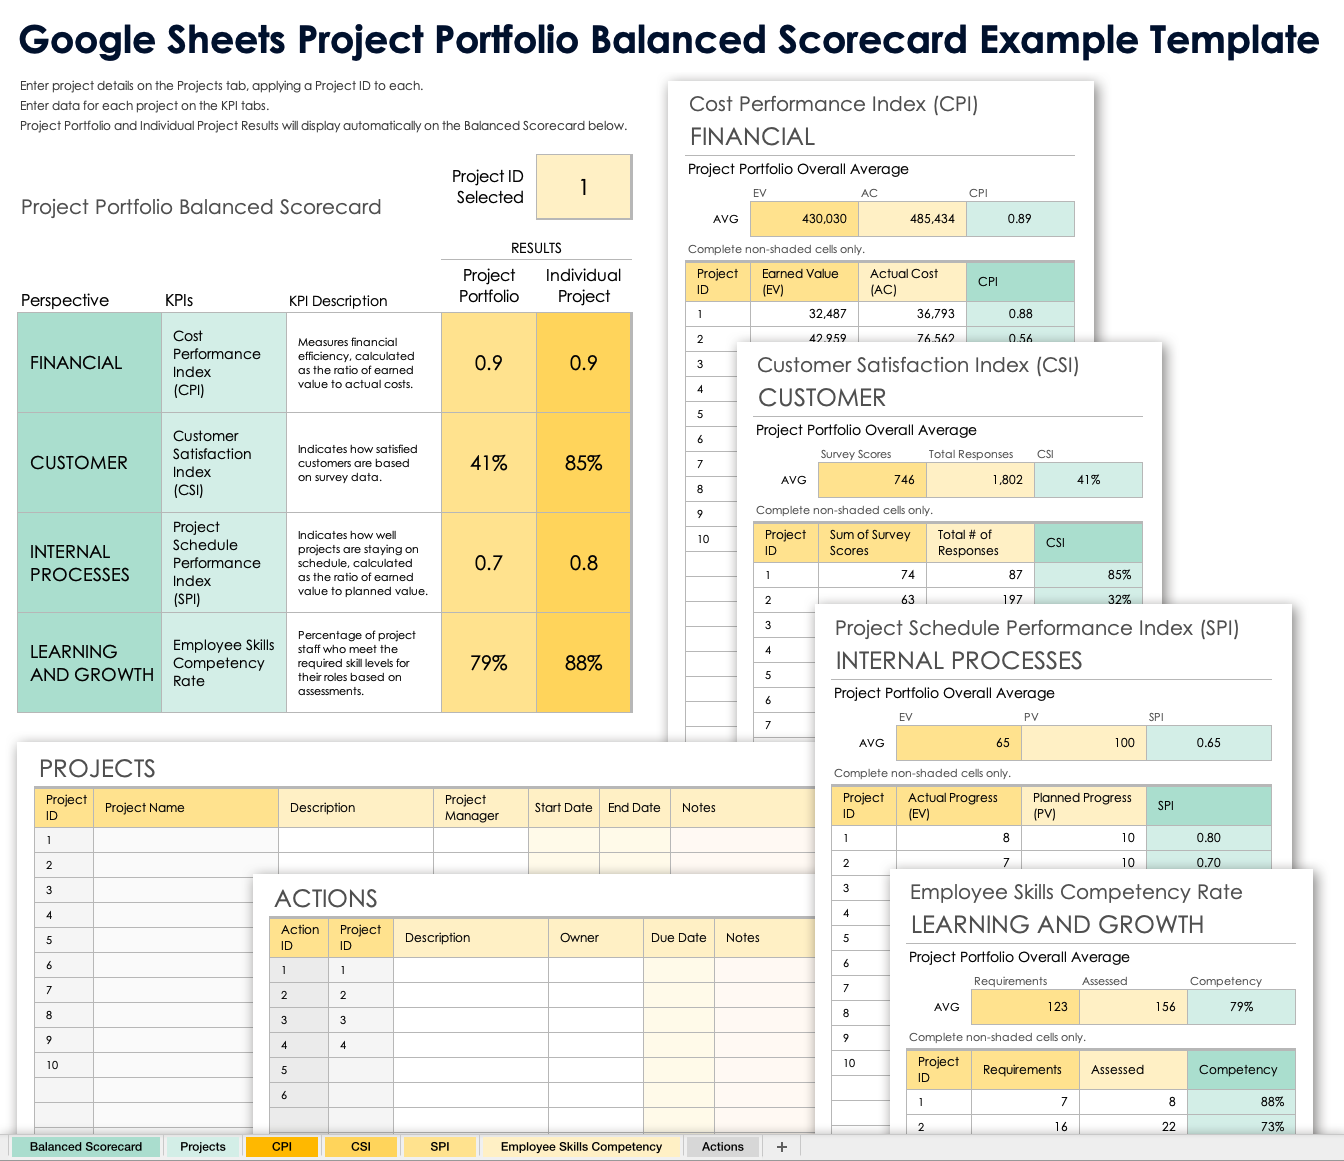 Google Sheets Project Portfolio Balanced Scorecard Template